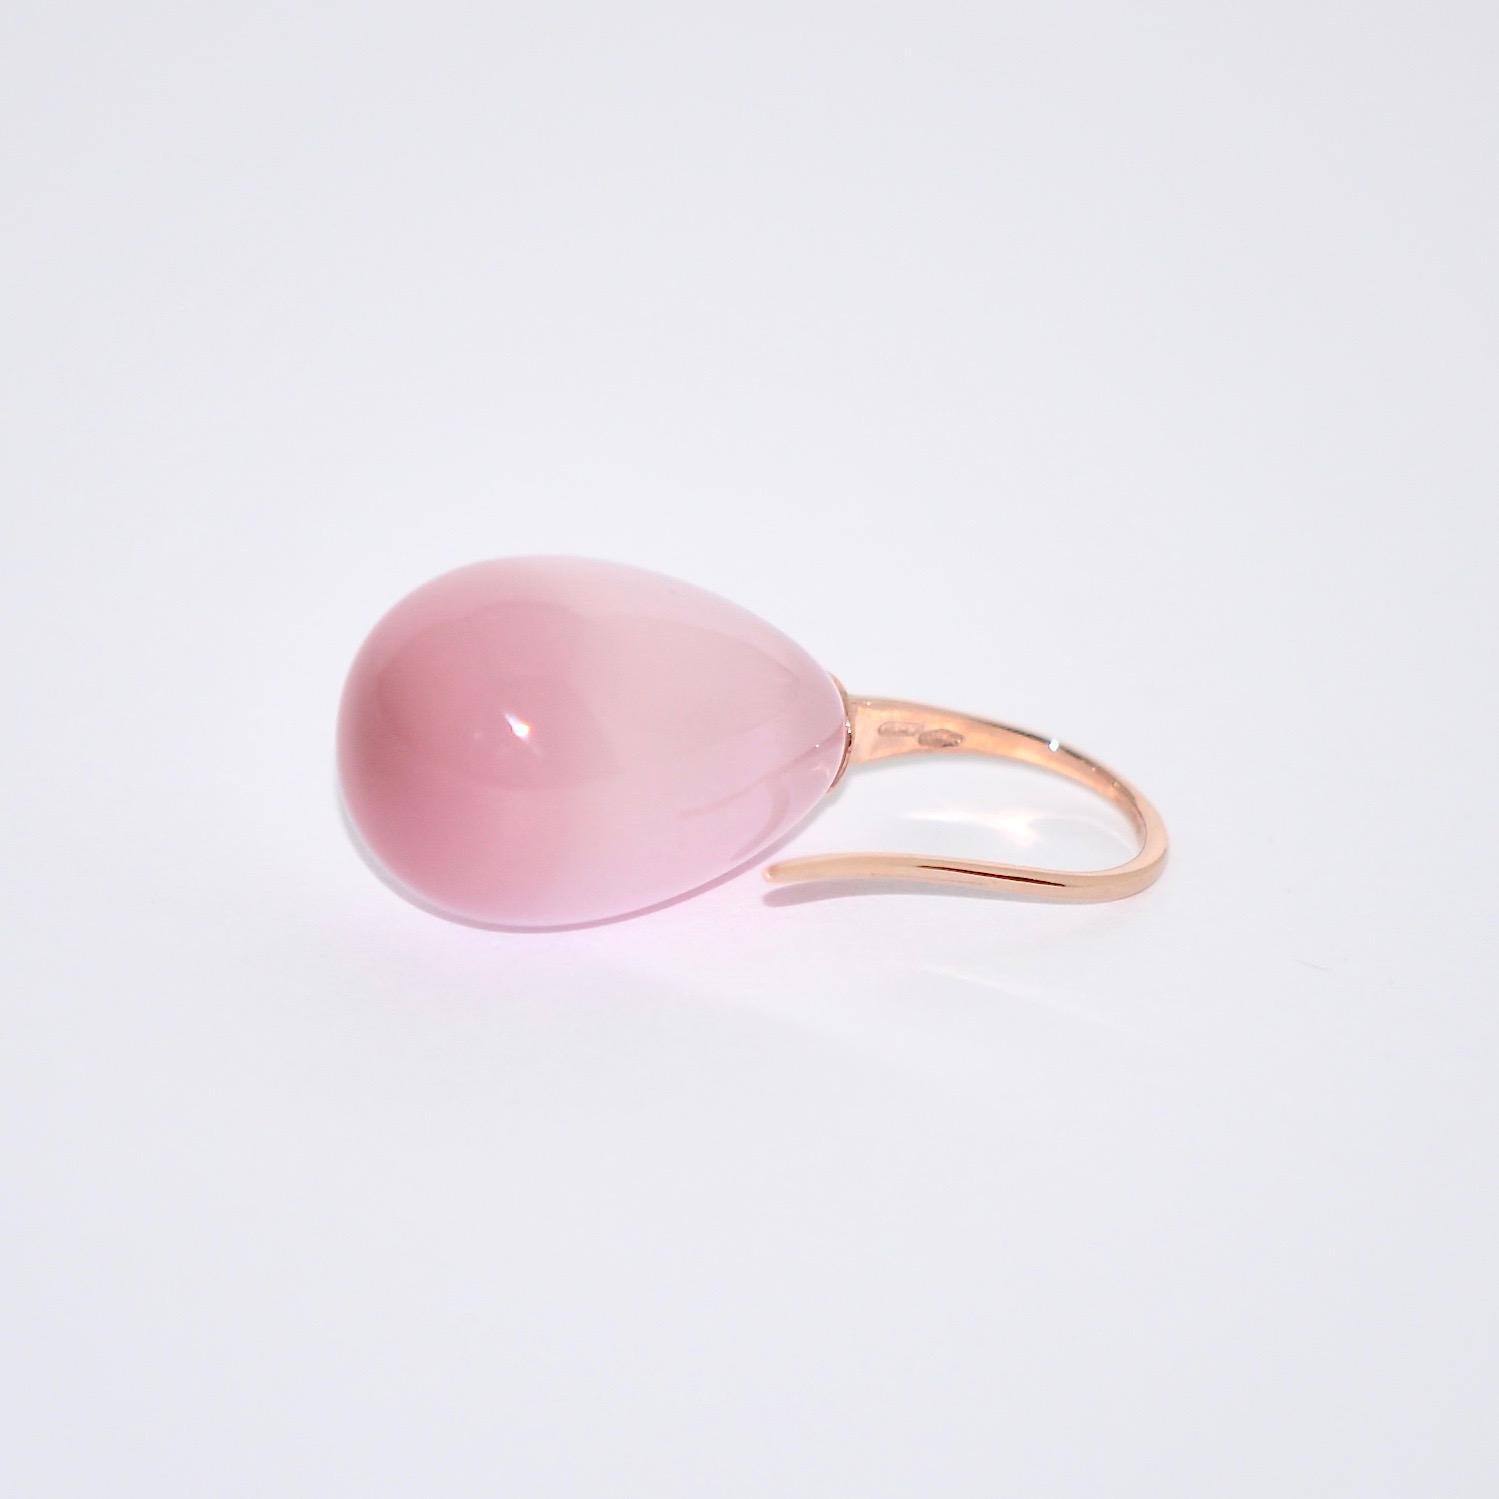 Discover this Pink Quartz and Rose Gold 18 Karat Drop Earrings.
Pink Quartz
Rose Gold 18 Karat